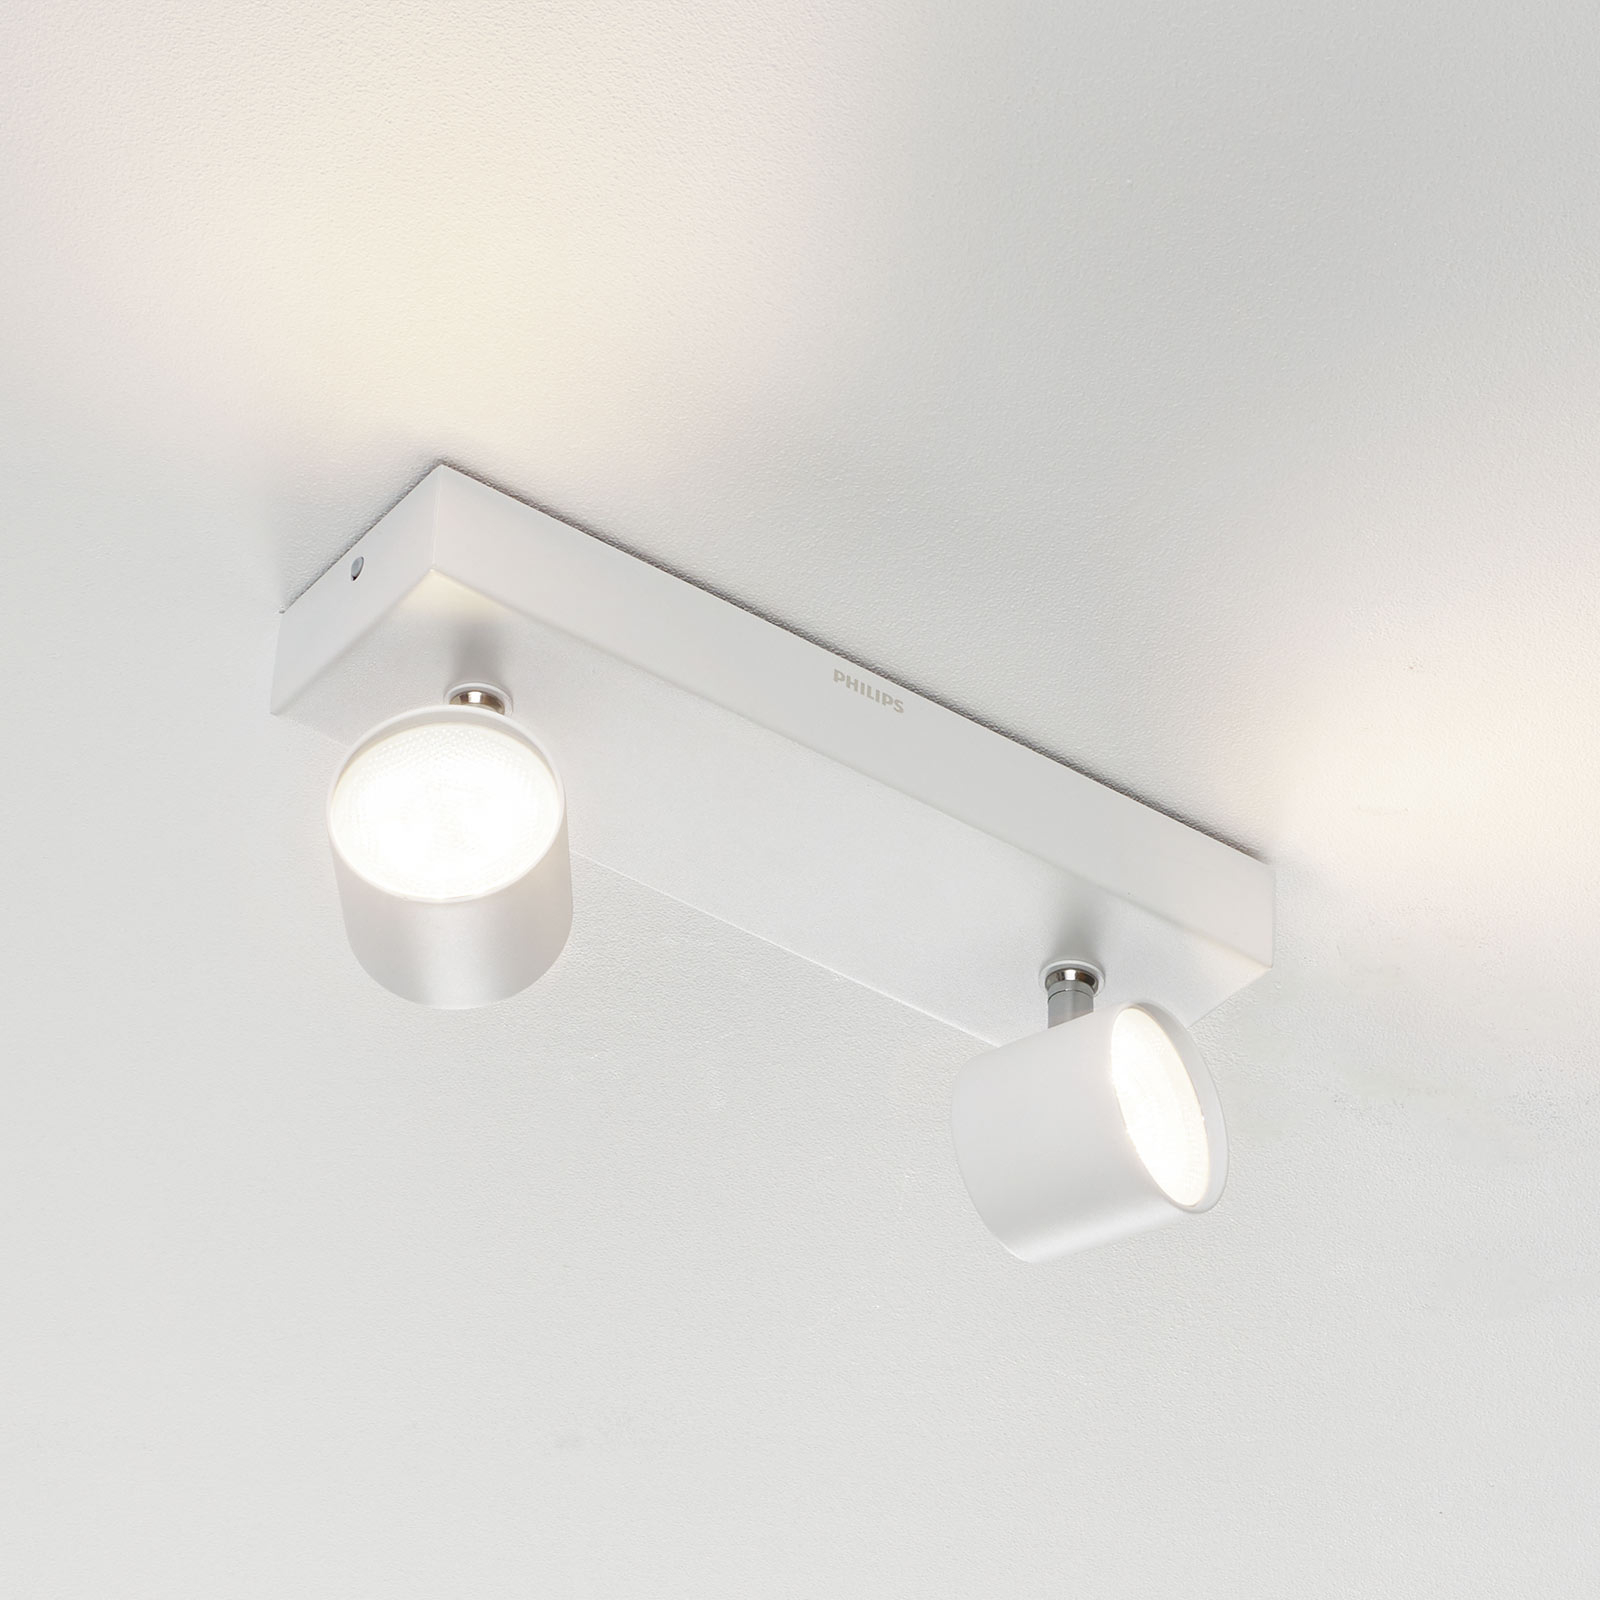 Tarief acuut Productie Star 2-lamp LED spot, warmglow, wit | Lampen24.nl